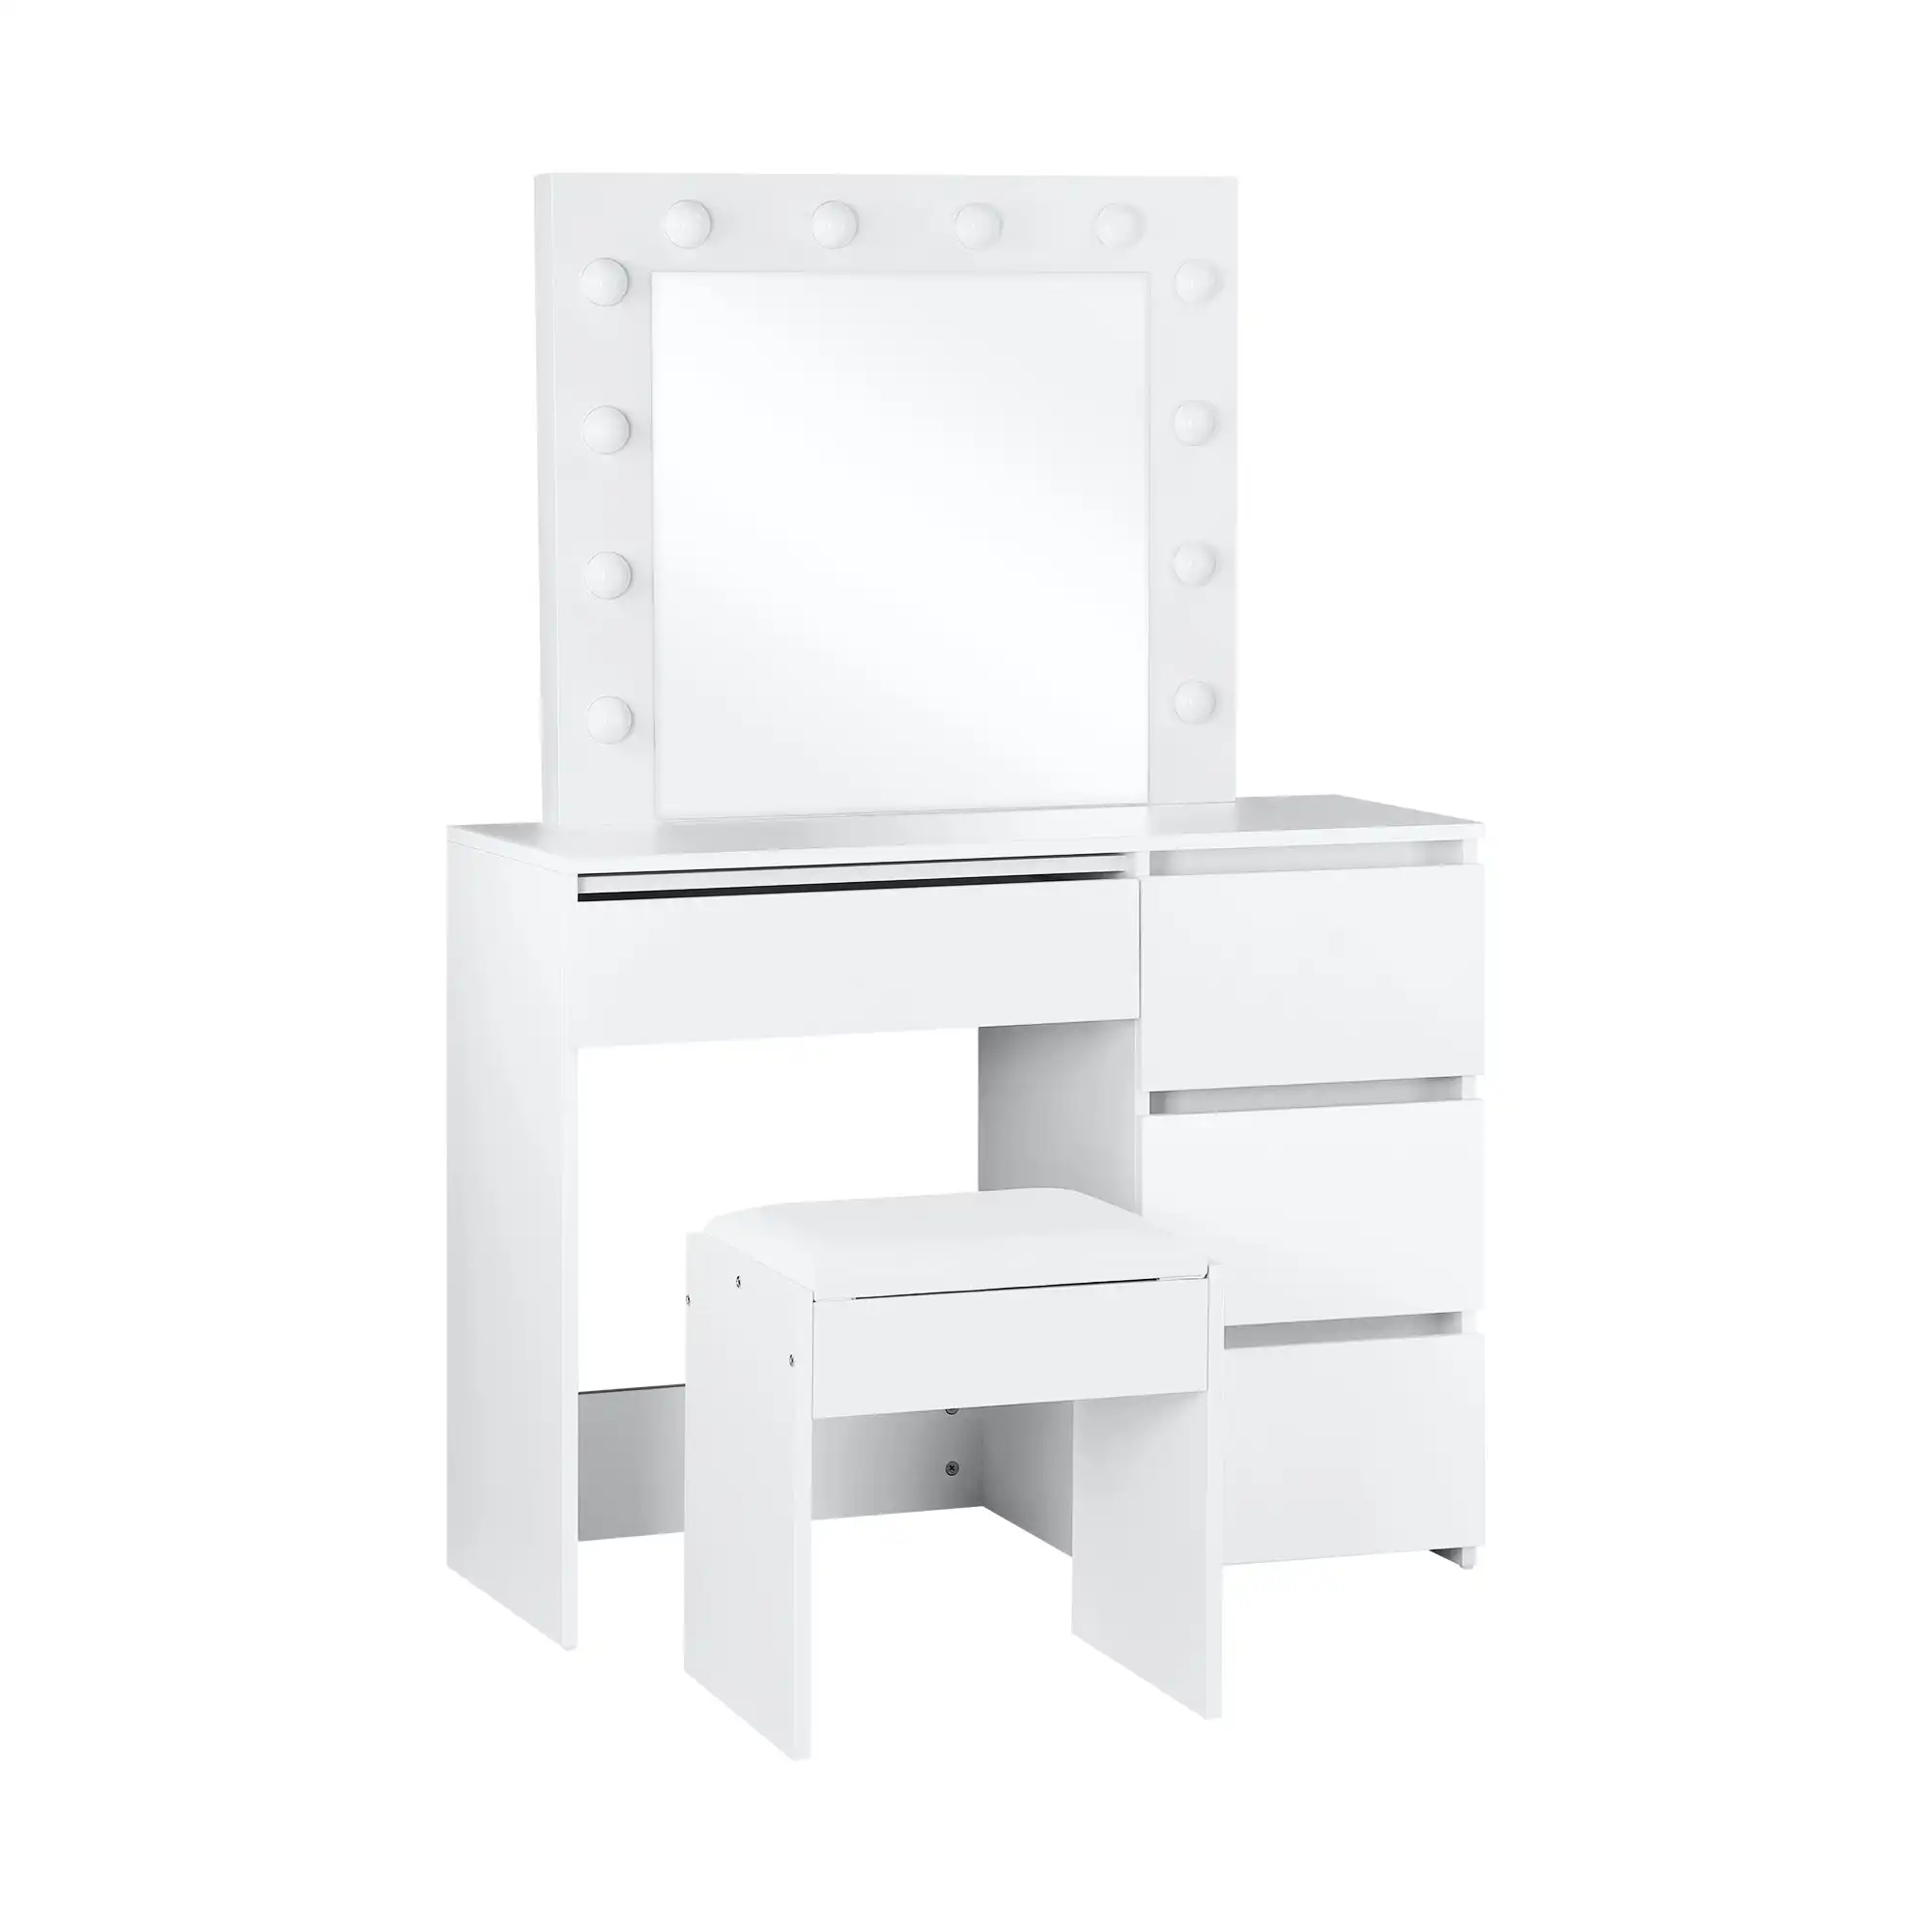 Oikiture Dressing Table Stool Set Makeup Desk Mirror Storage Drawer 12 LED Bulbs White